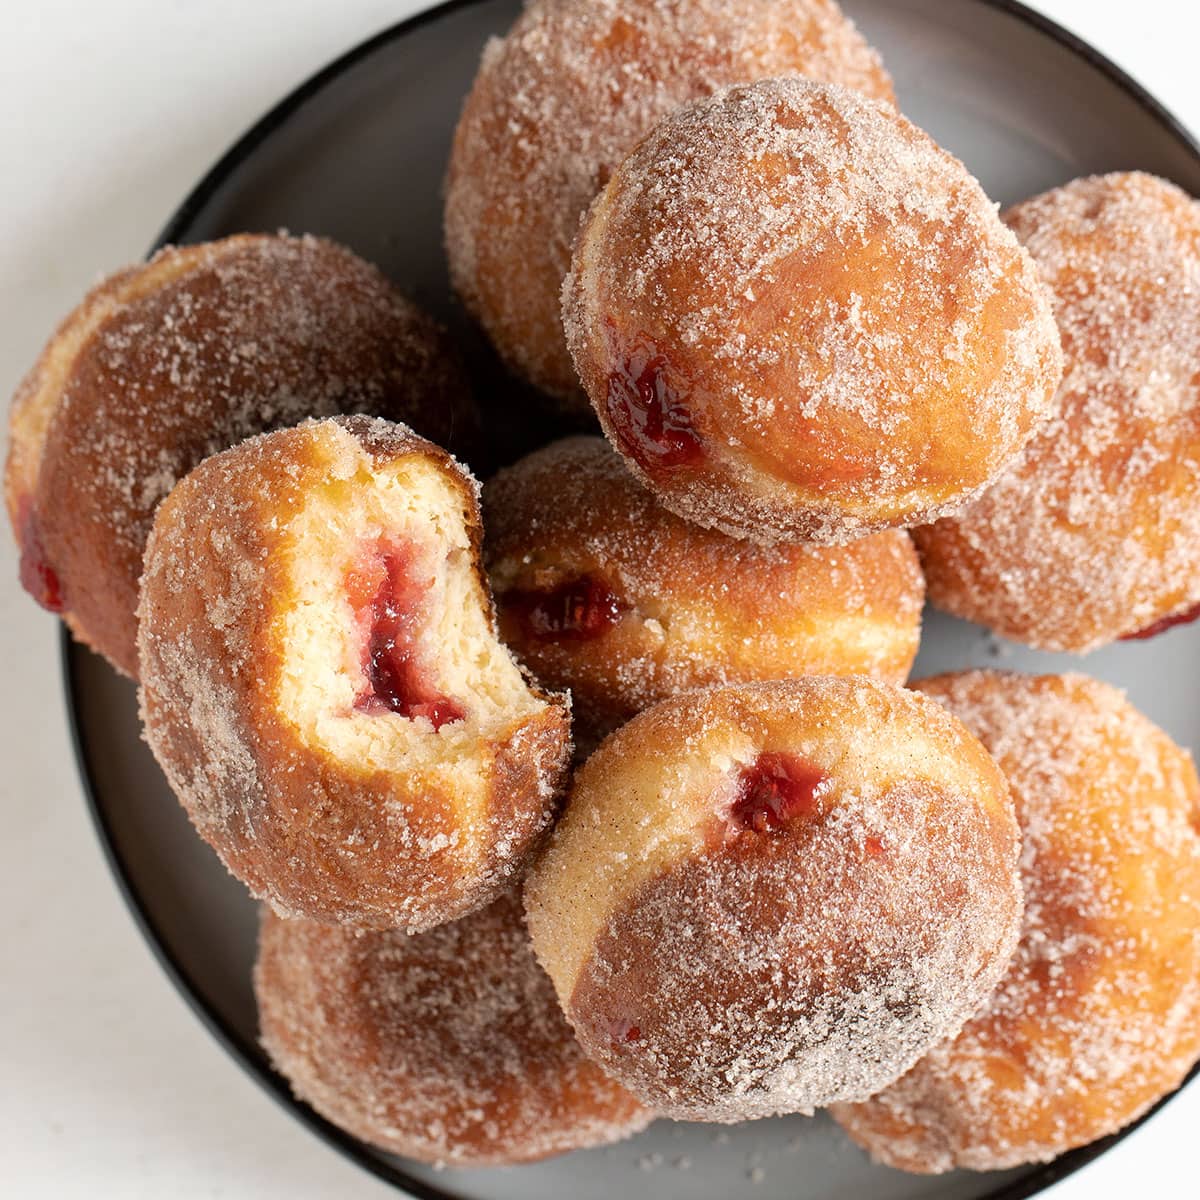 jam doughnuts on a plate